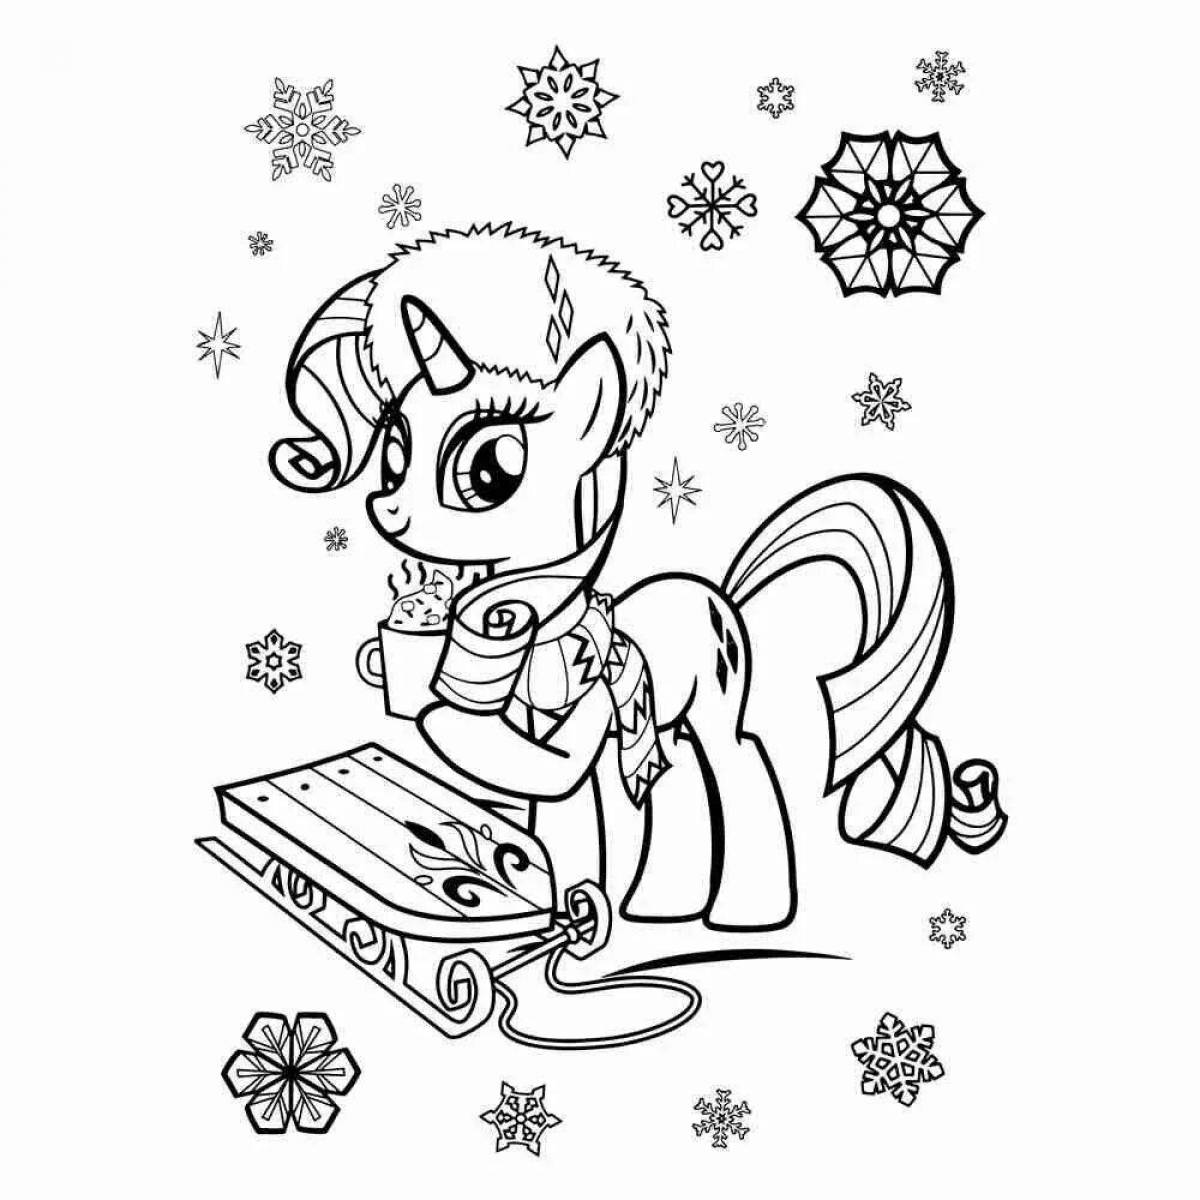 Shiny Christmas pony coloring book